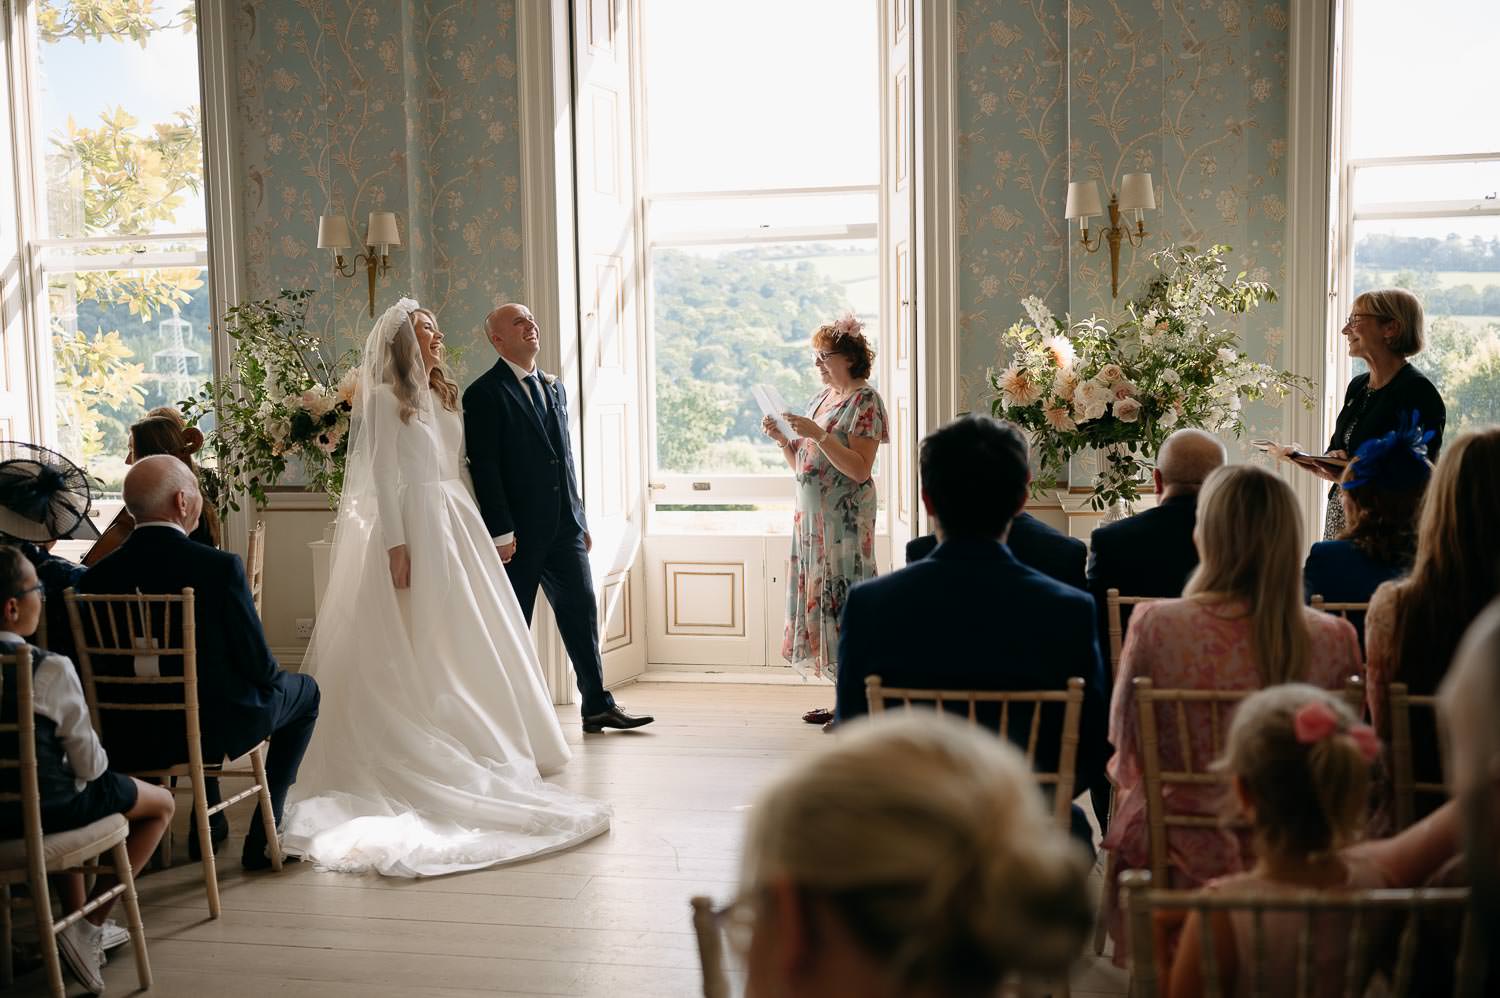 Pynes House wedding by Somerset wedding photographer Sophia Veres Photography.